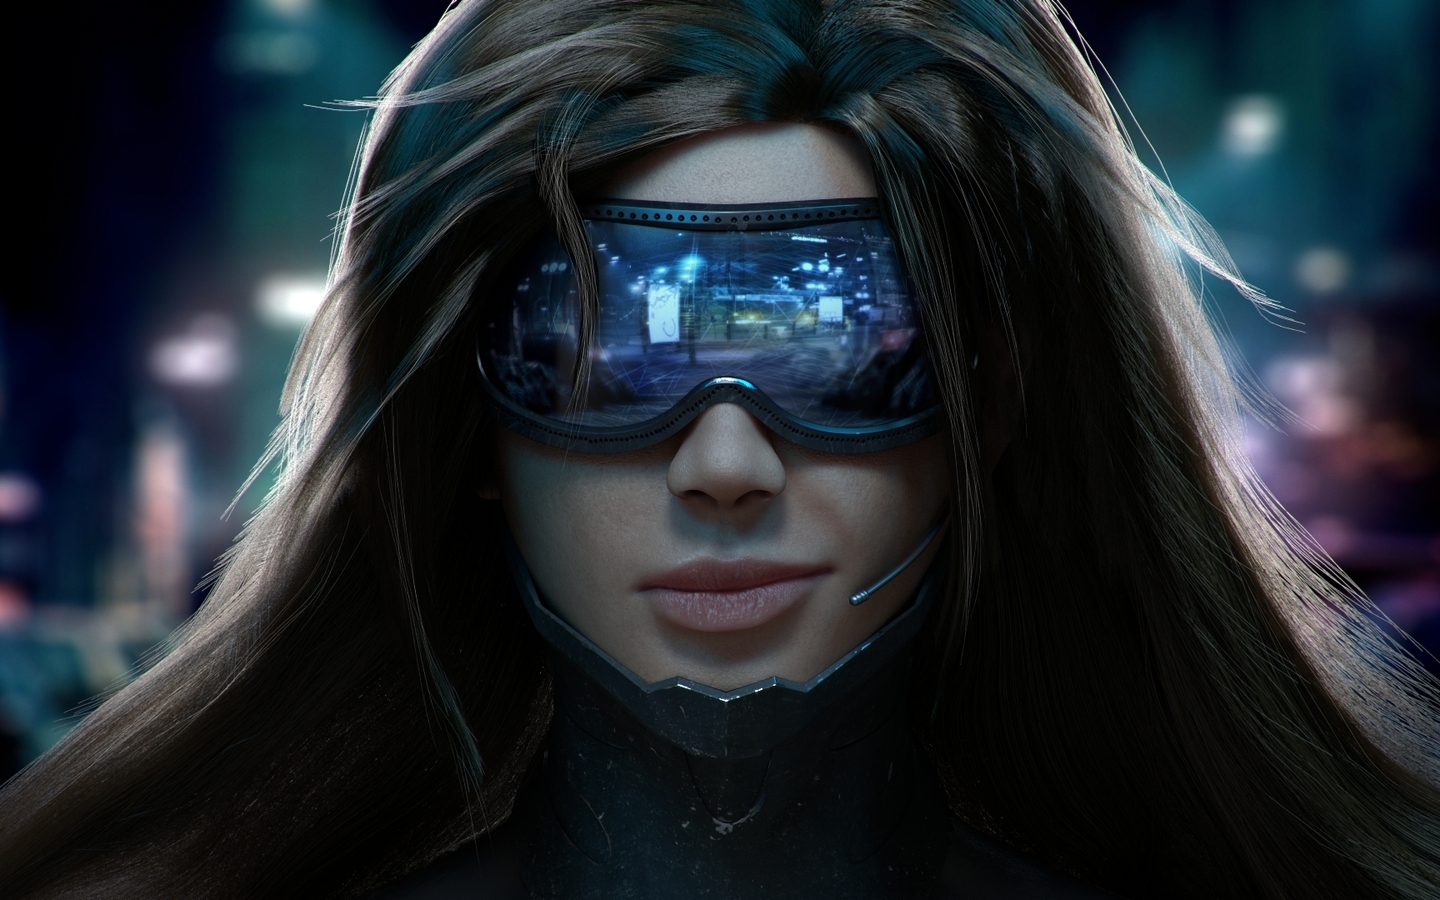 Image: Girl, glasses, brunette hair, armor, microphone, face, reflection, cyberpunk, 3D